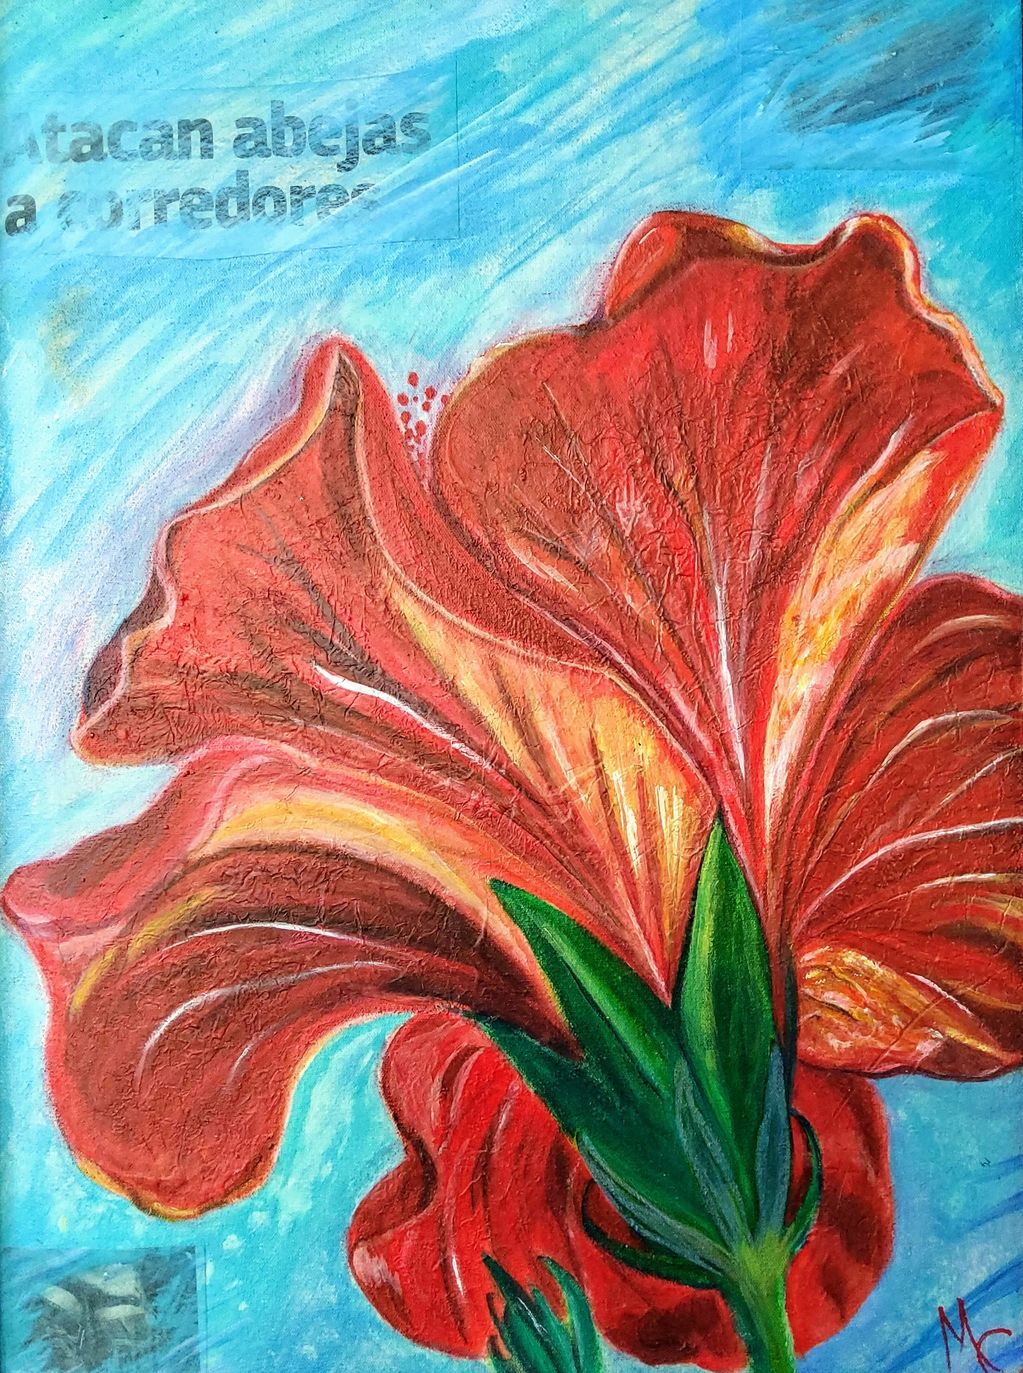 Flor de mi tierra / Maga, Puerto Rico's national flower
2015
Acrylic on canvas / Acrílico sobre tela